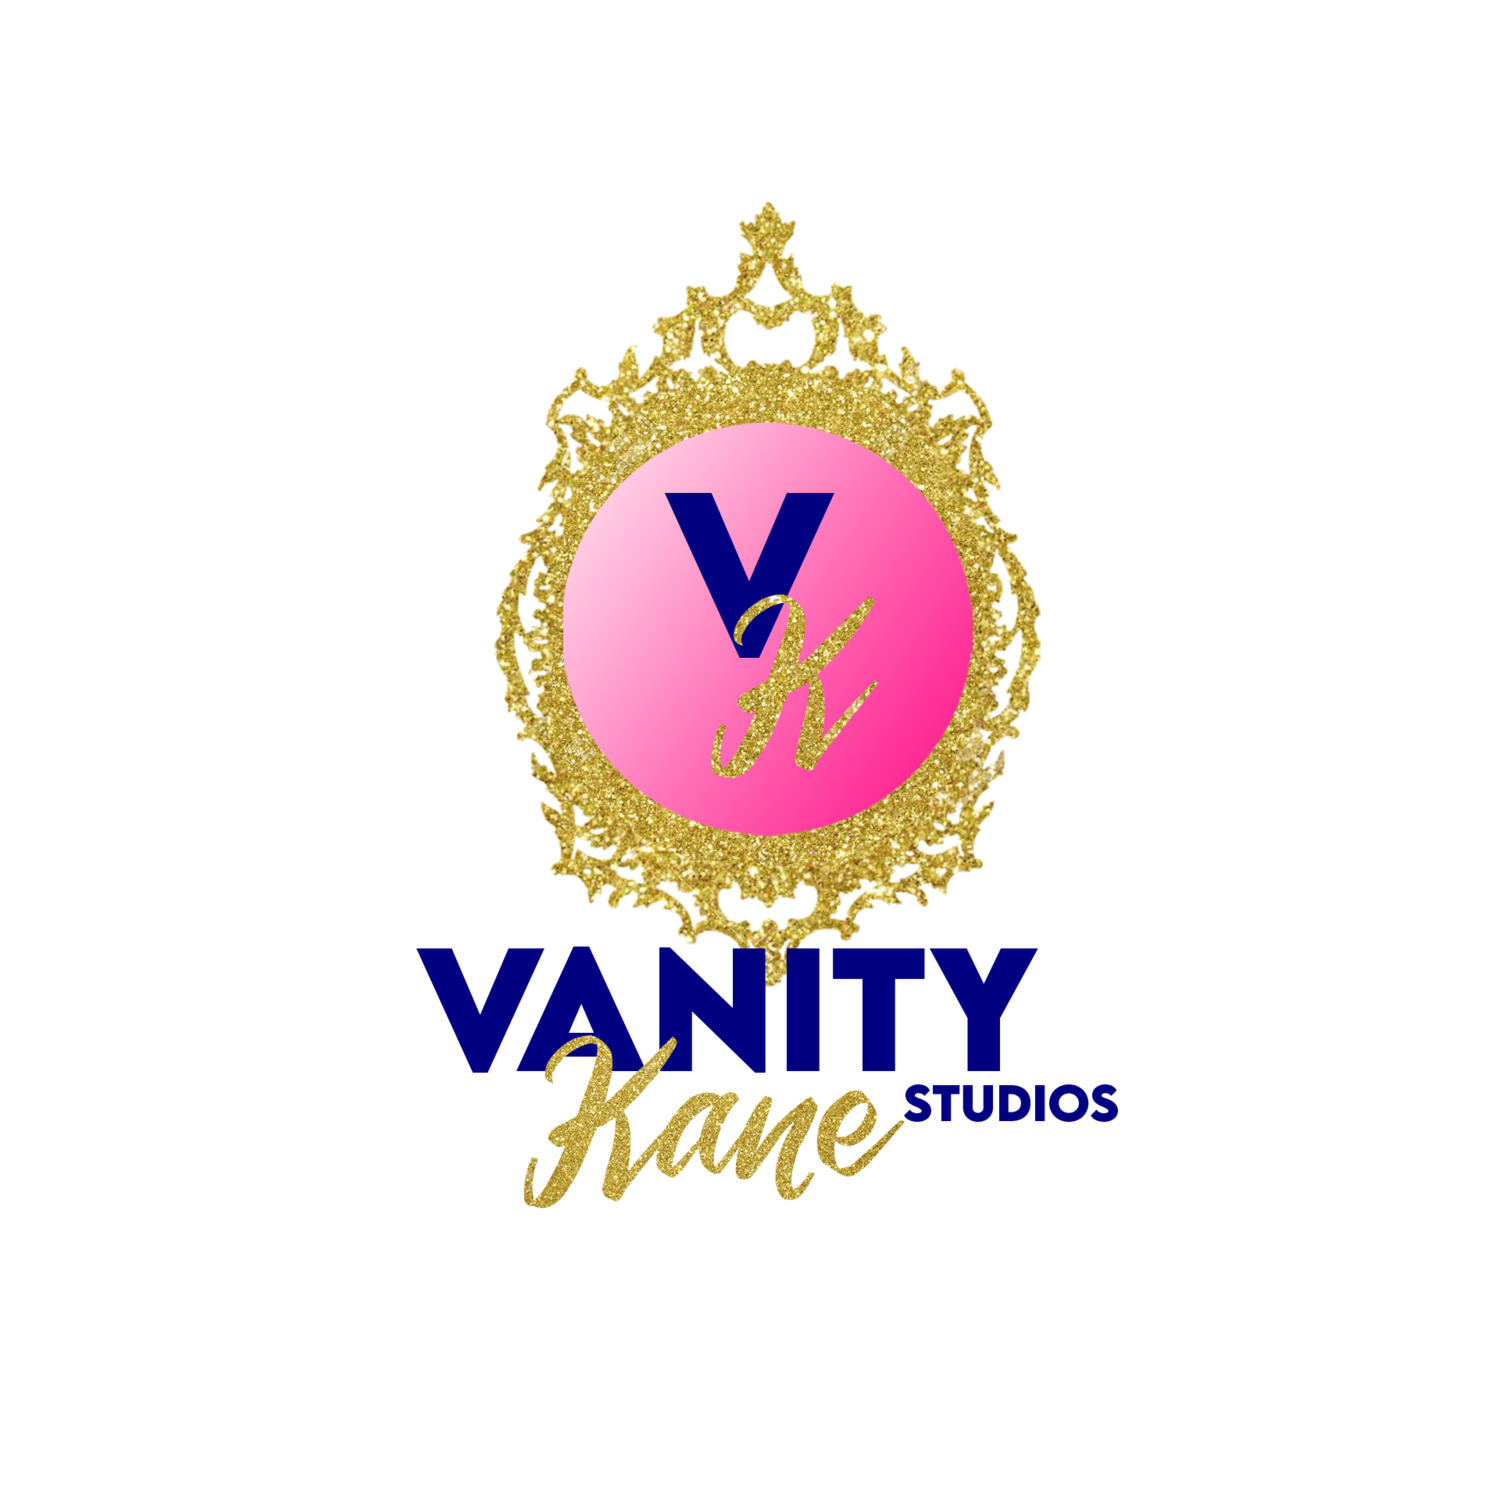 Vanity Kane Studios